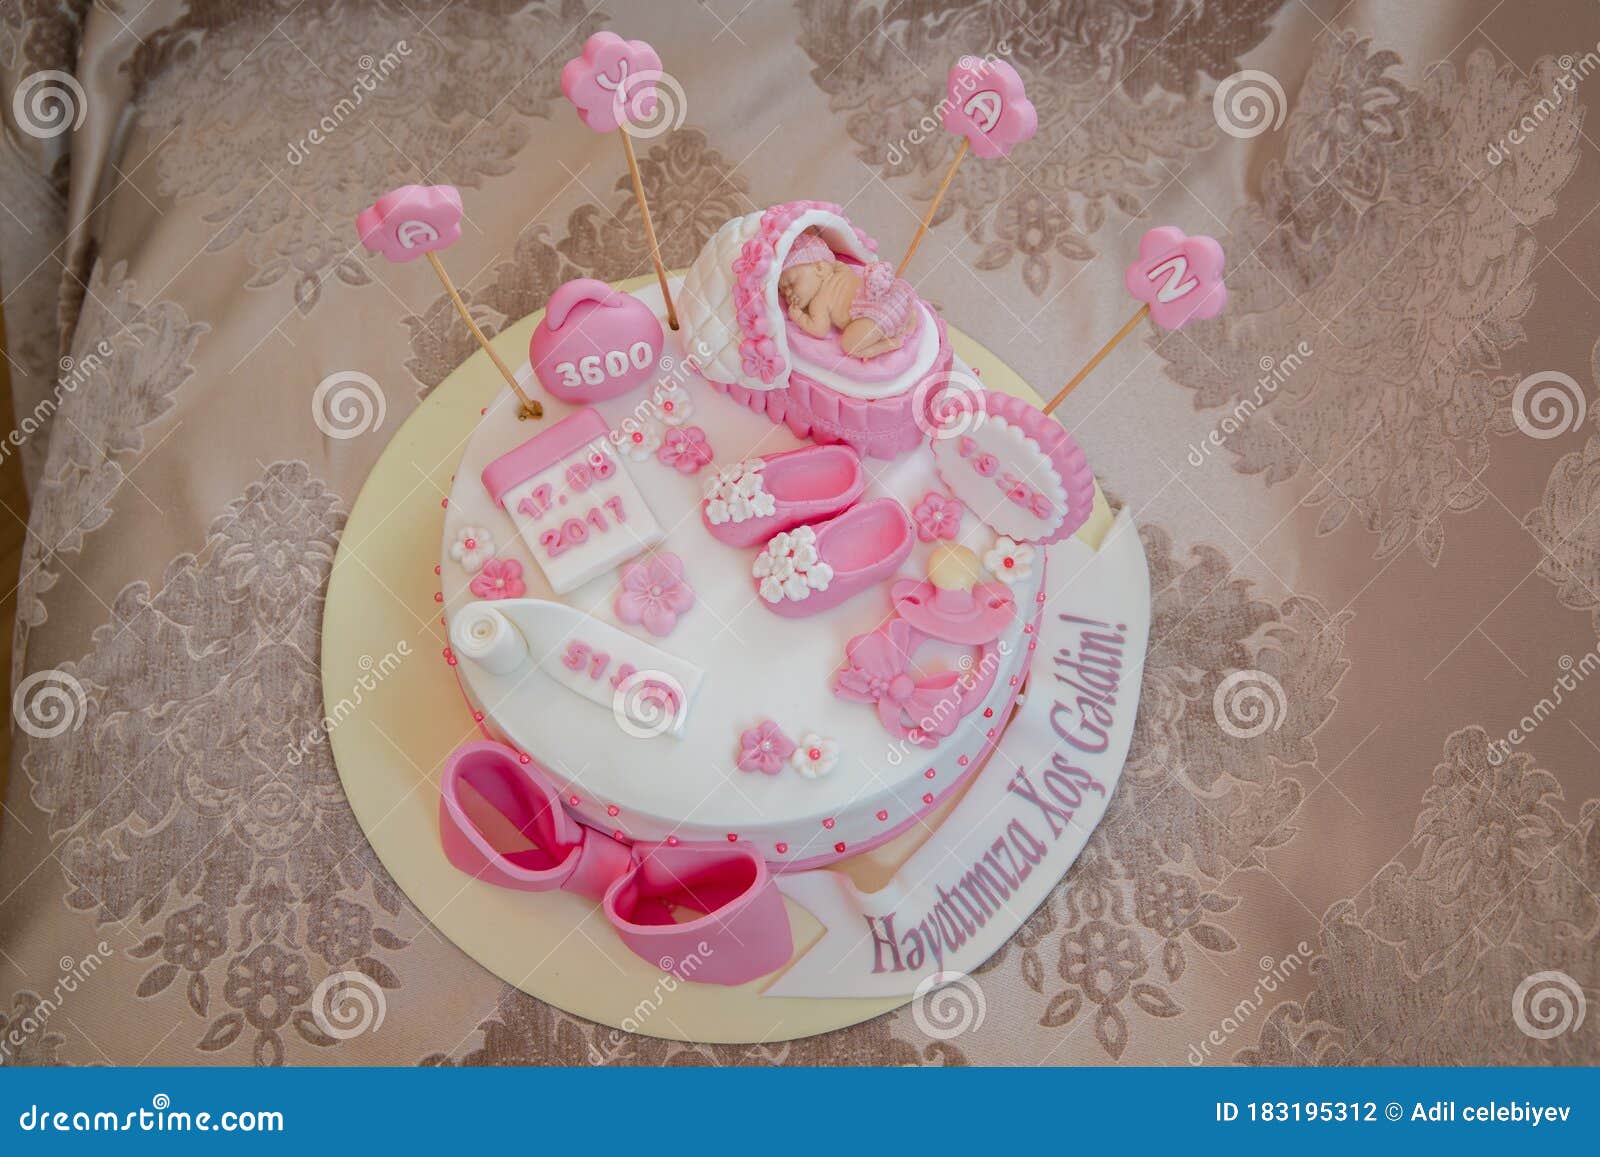 Baby cakes dp